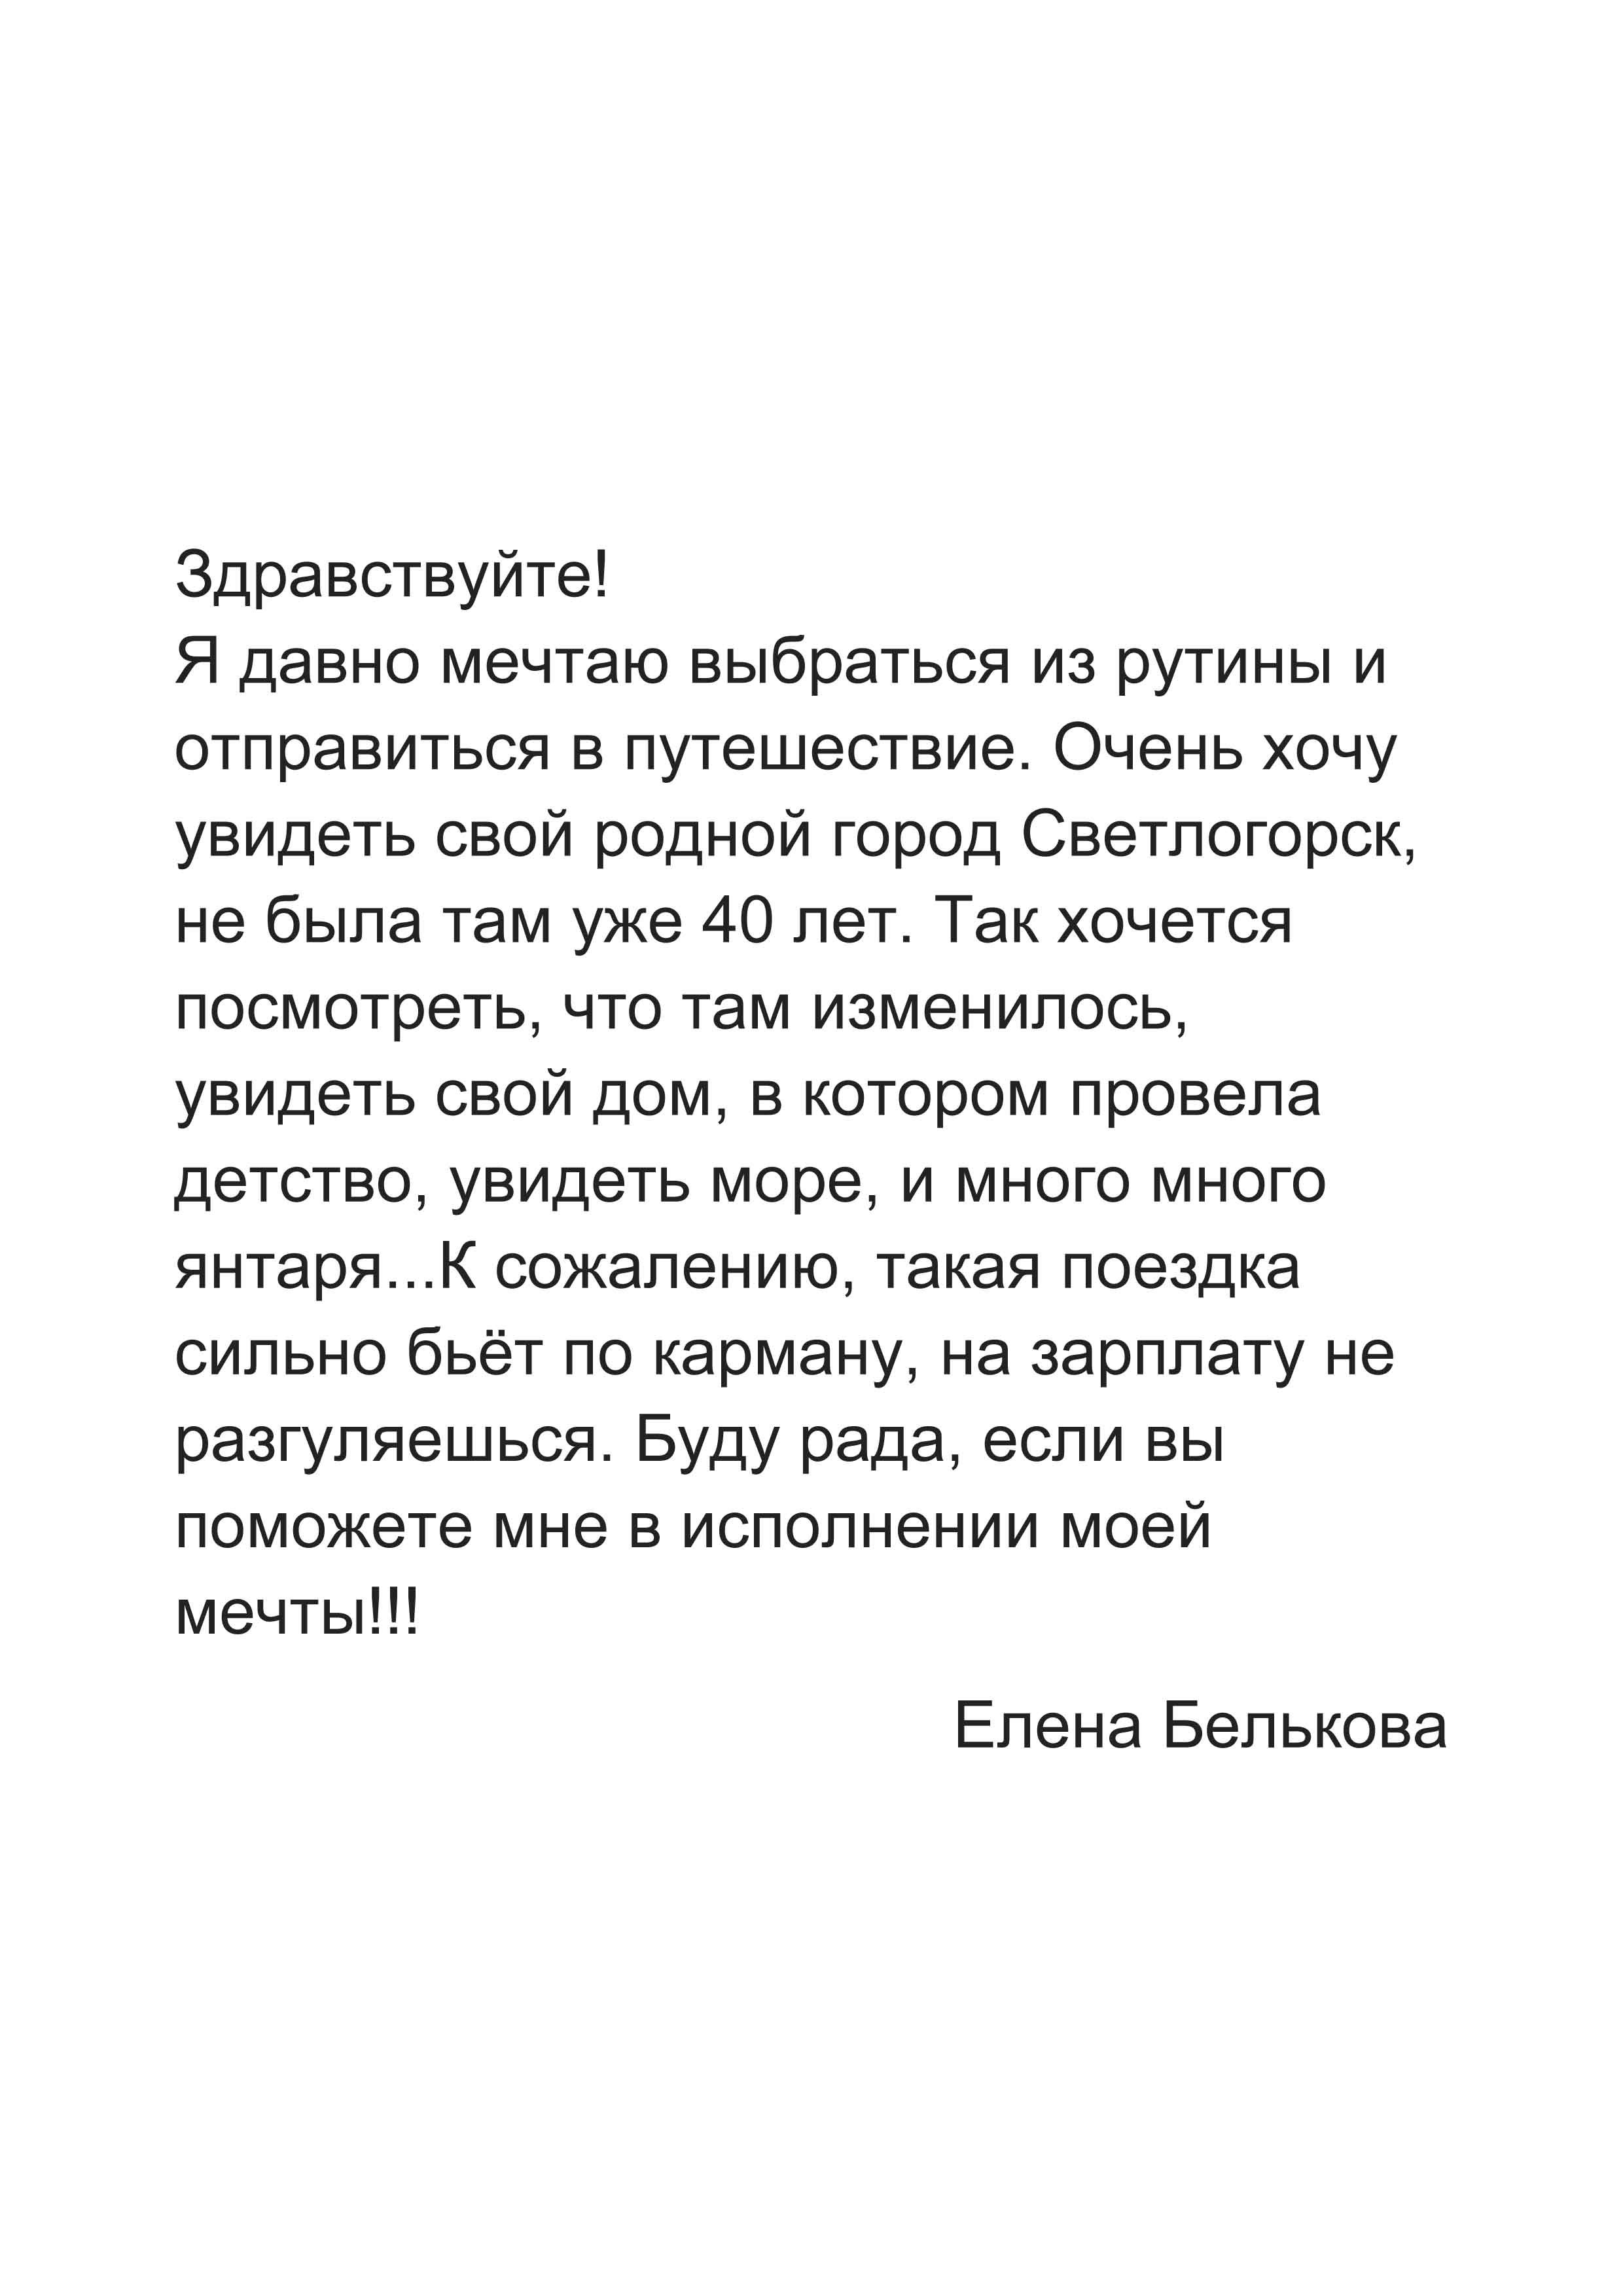 Елена Белькова